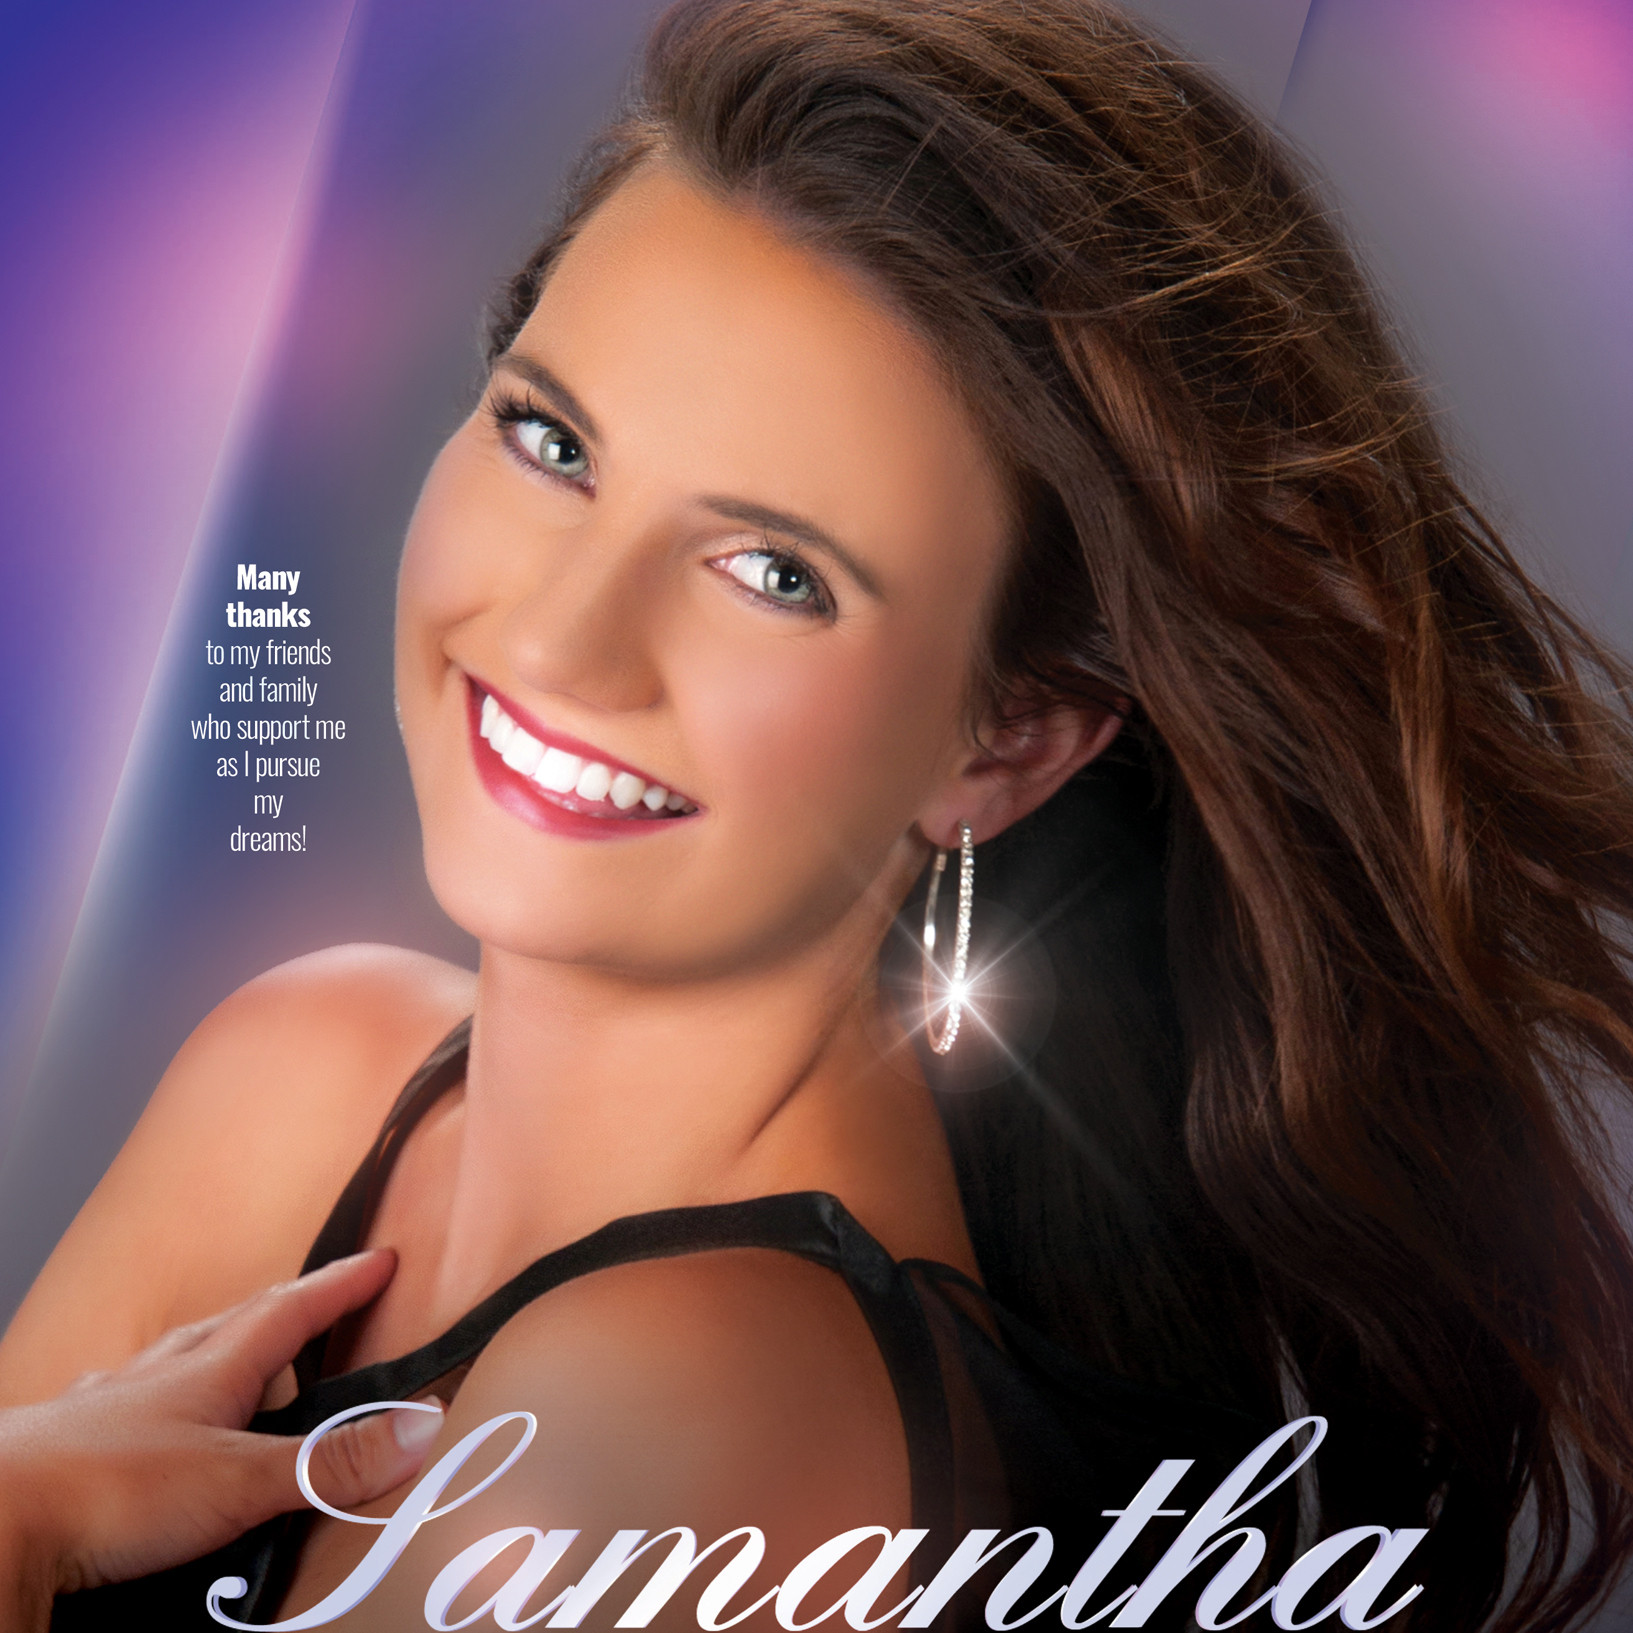 Queensized Beauties 2: Samantha Jane